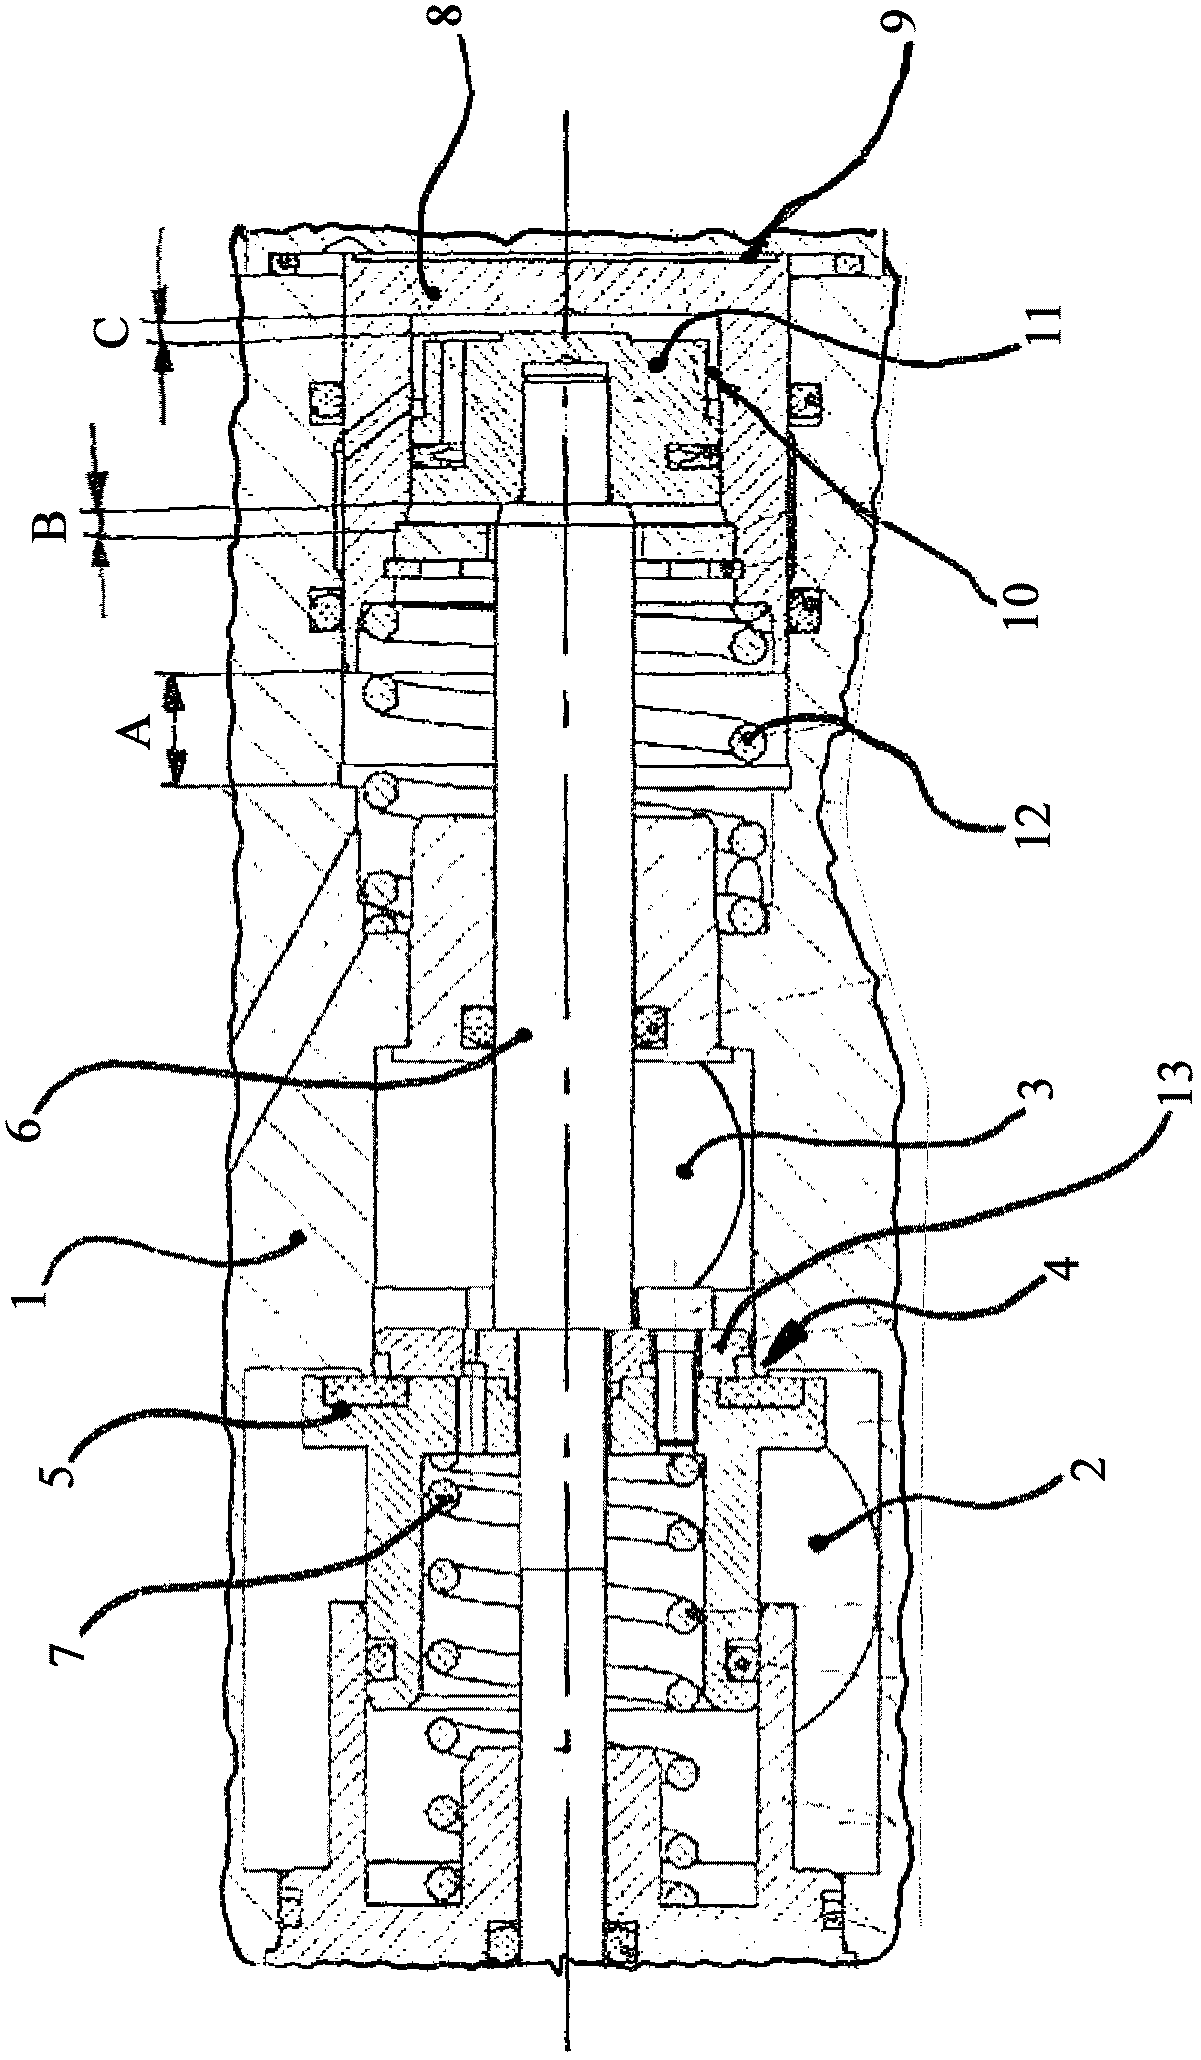 Multi-stage switchable pilot-controlled valve arrangement